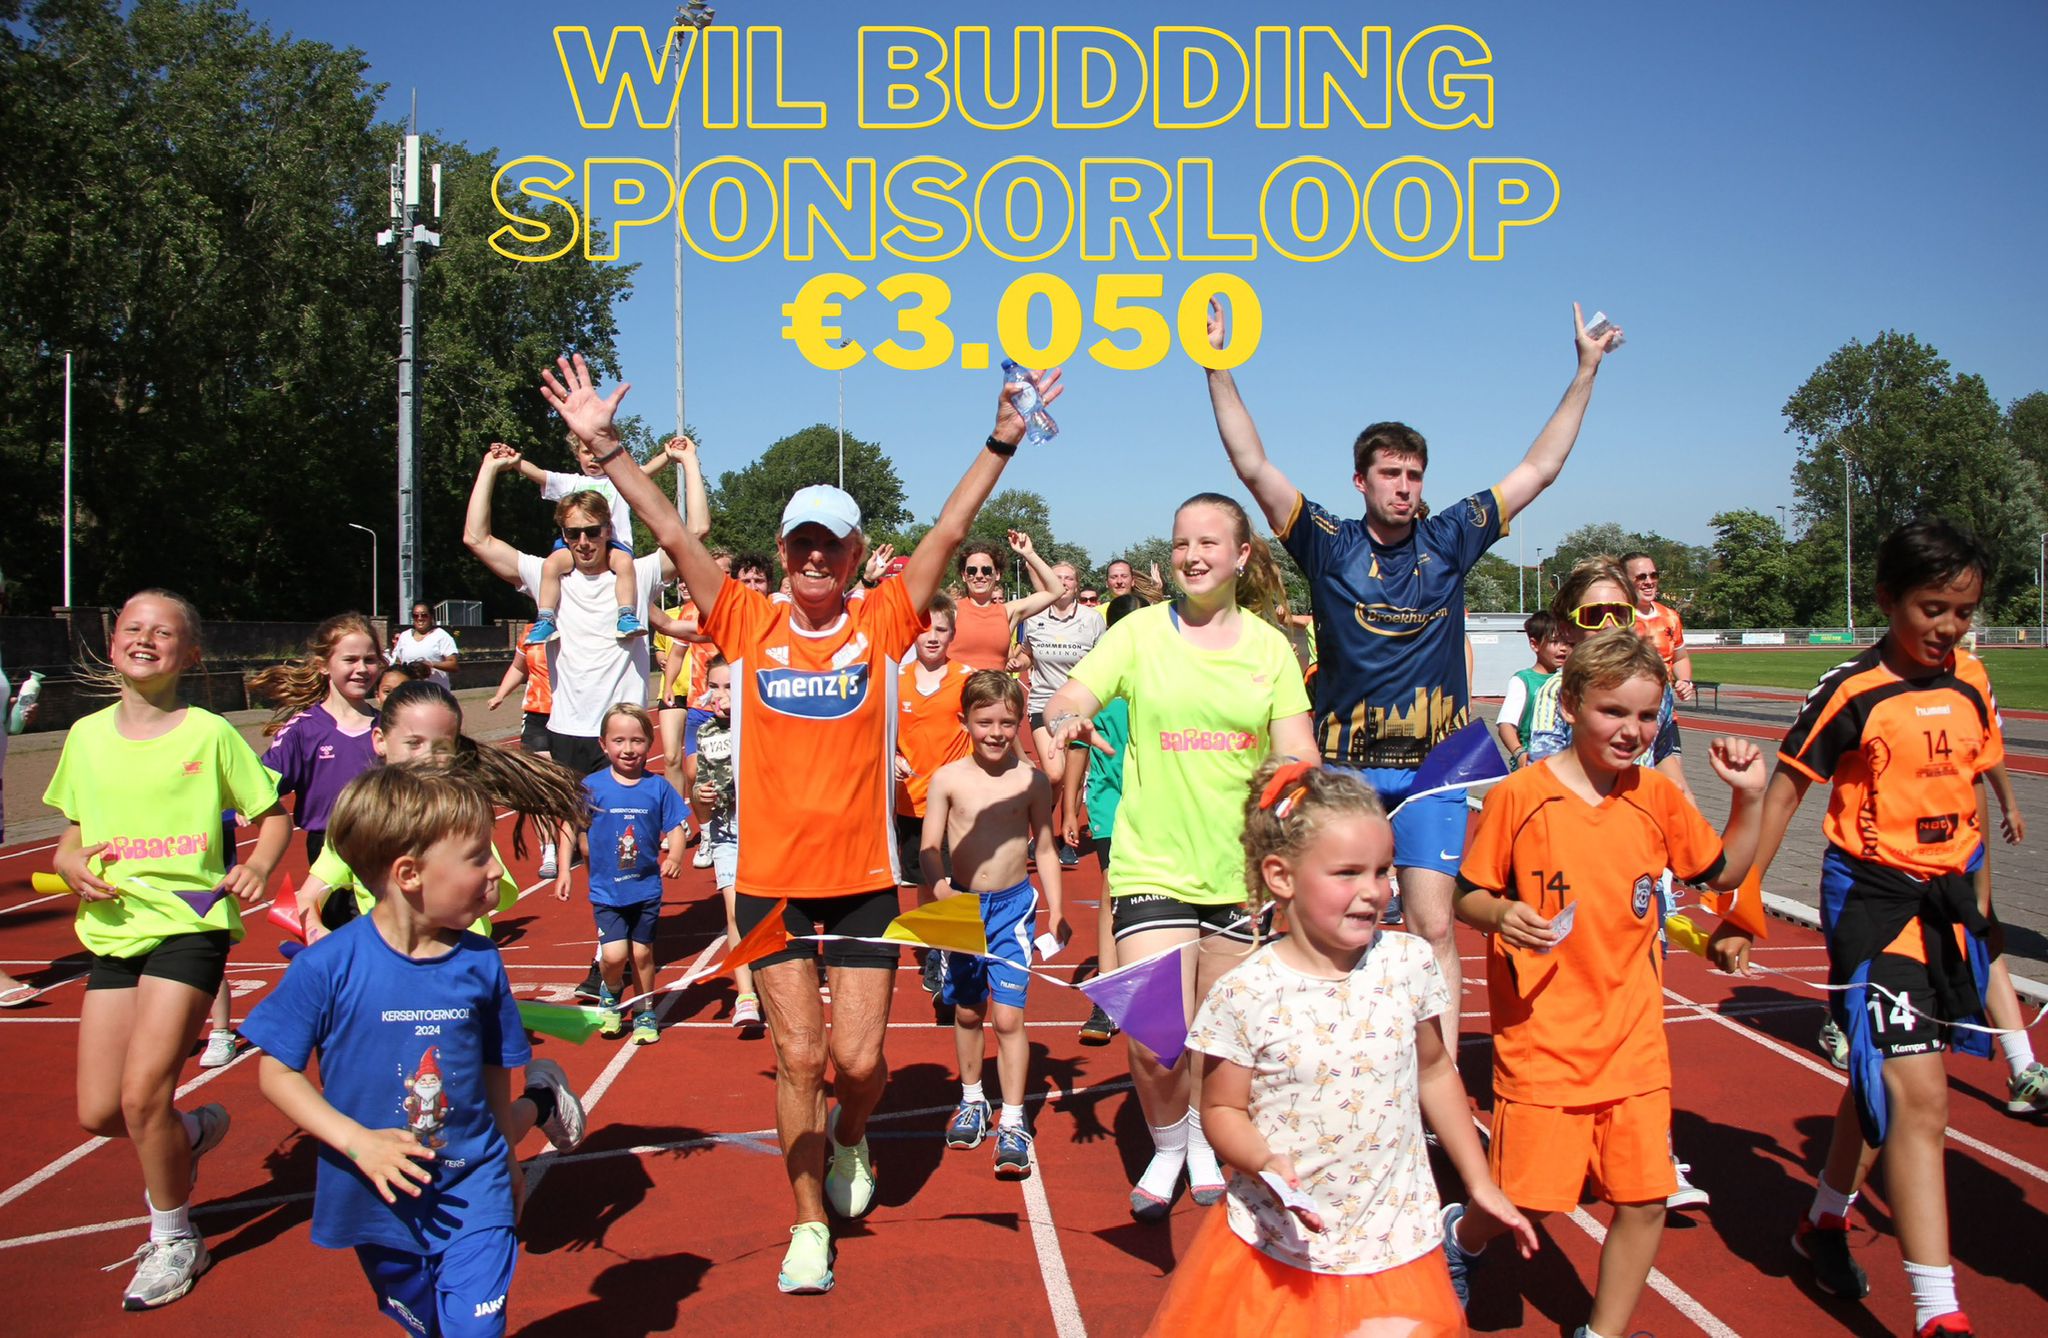 Wil Budding Sponsorloop - €3.050